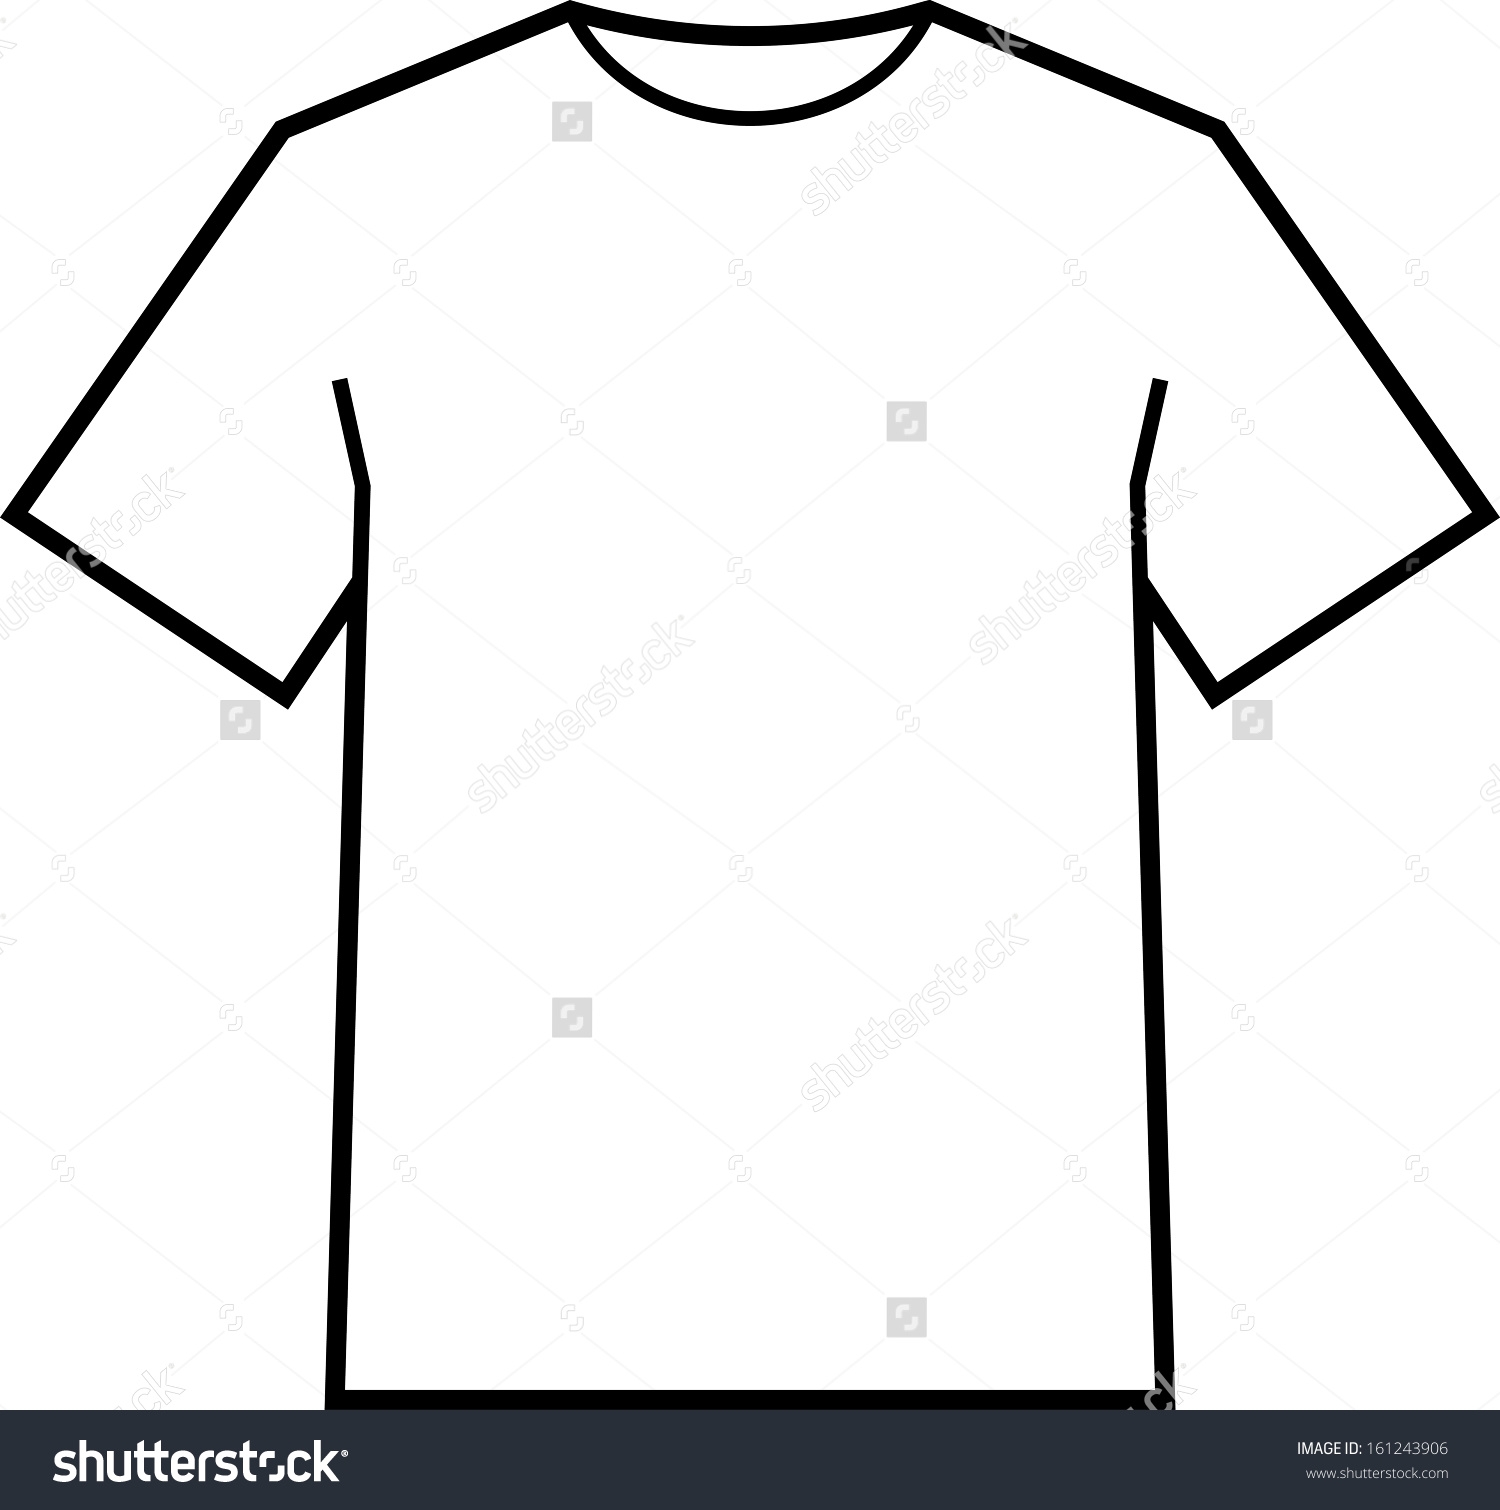 t shirt outline